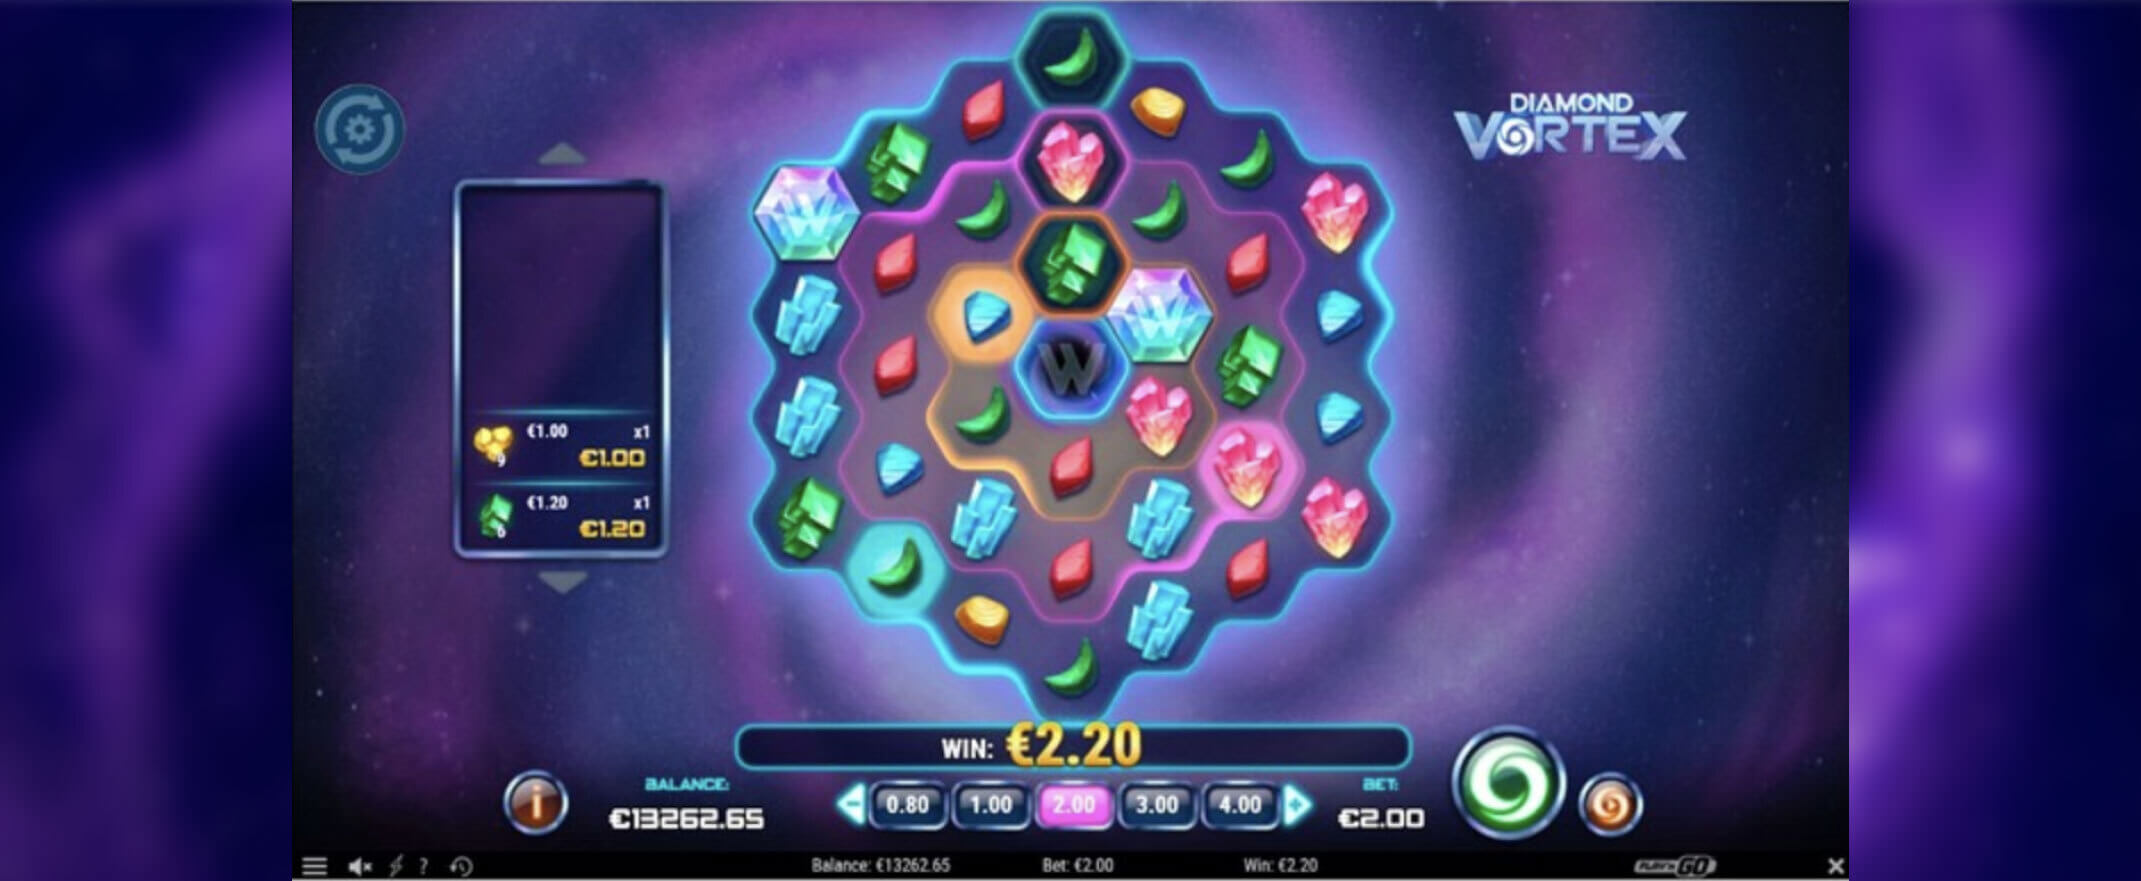 Diamond Vortex slot screenshot